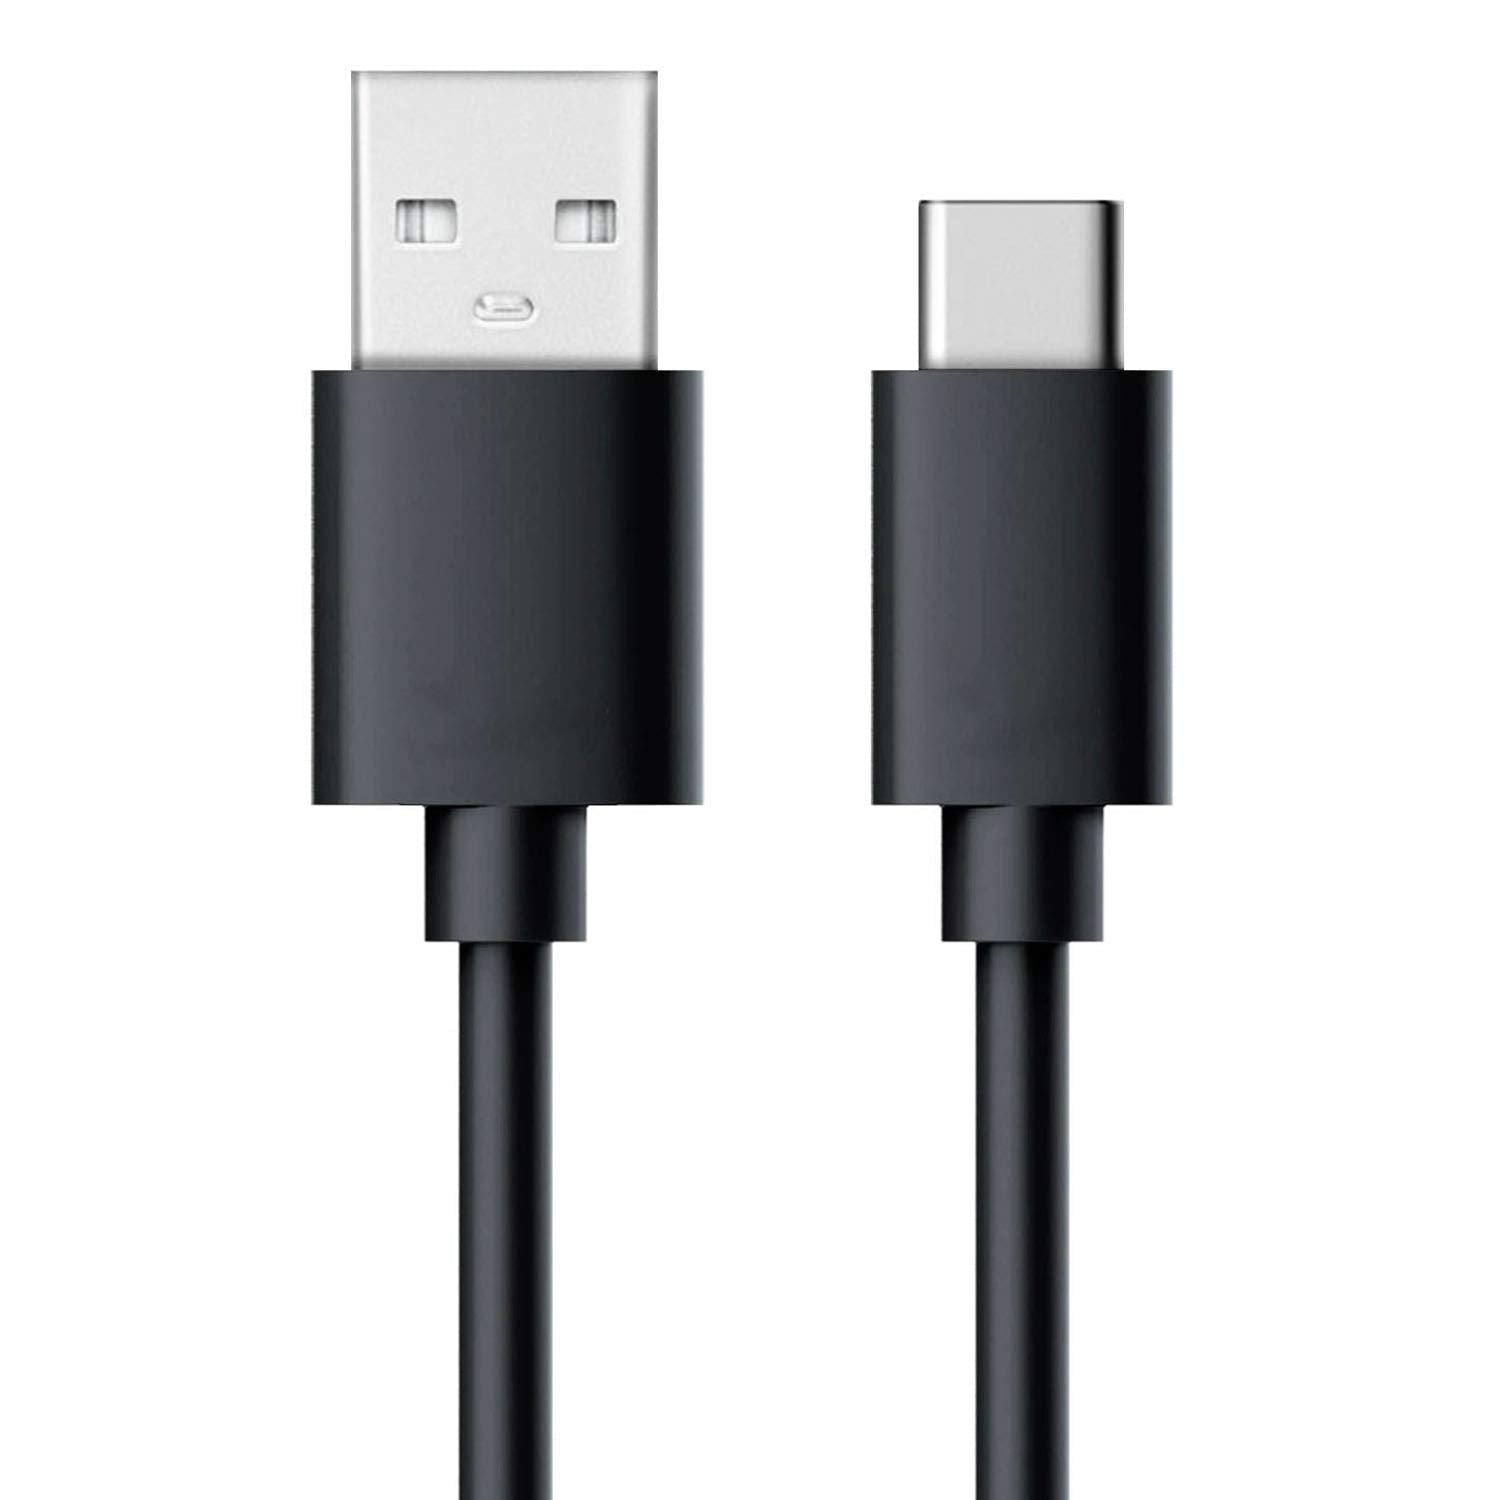 Mi Redmi Note 7 Pro Fast Charging Type-C Data Cable Black -1 Meter